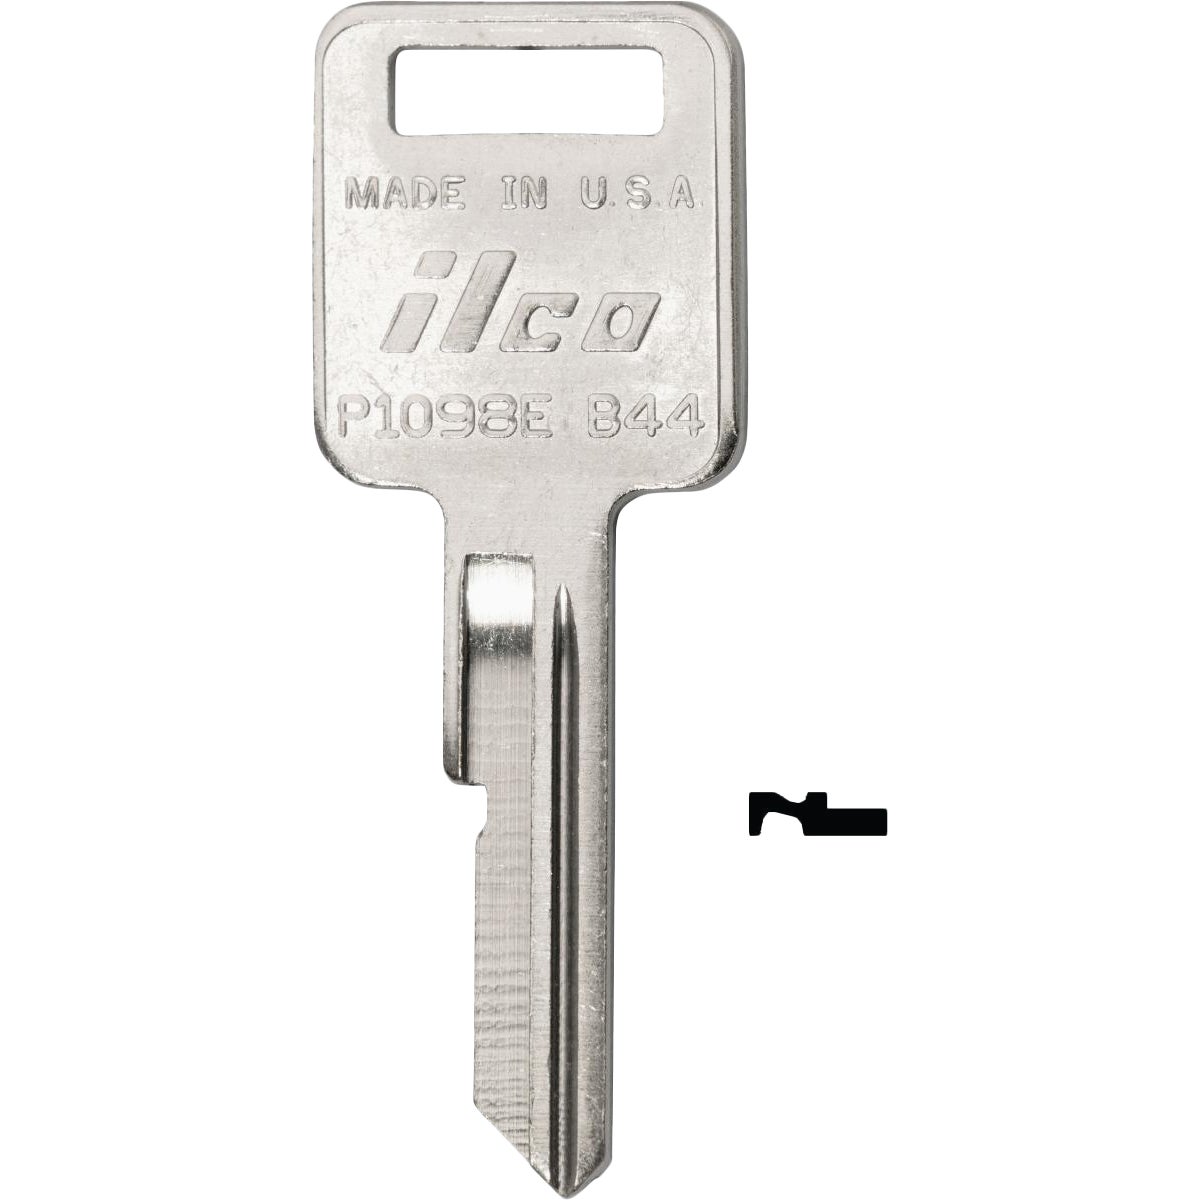 ILCO GM Nickel Plated Automotive Key, B44 / P1098E (10-Pack)